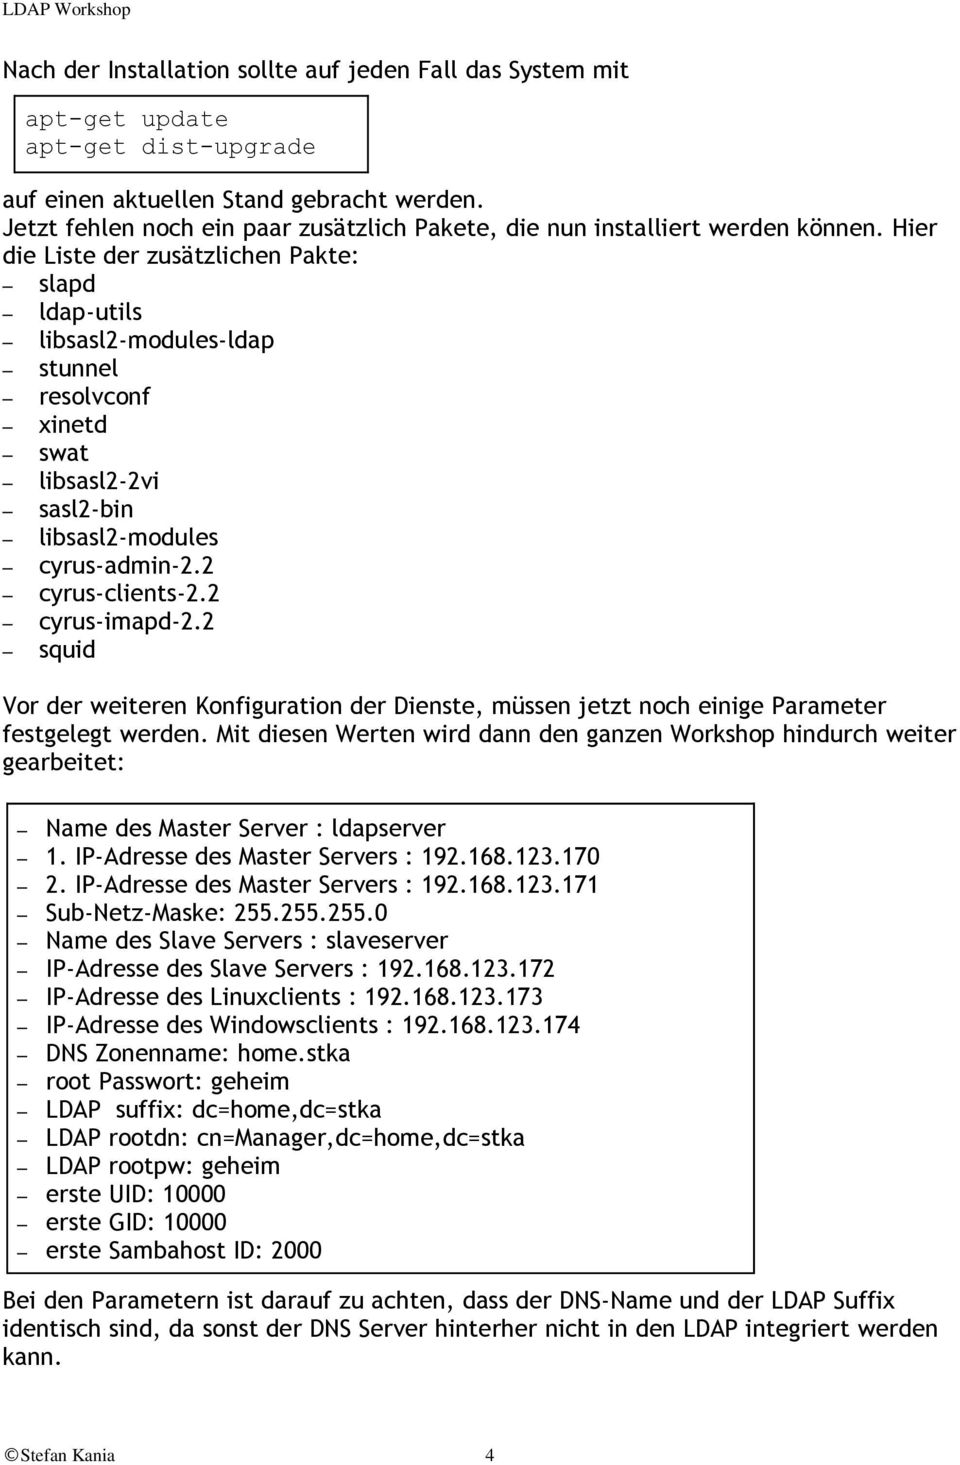 Hier die Liste der zusätzlichen Pakte: slapd ldap-utils libsasl2-modules-ldap stunnel resolvconf xinetd swat libsasl2-2vi sasl2-bin libsasl2-modules cyrus-admin-2.2 cyrus-clients-2.2 cyrus-imapd-2.